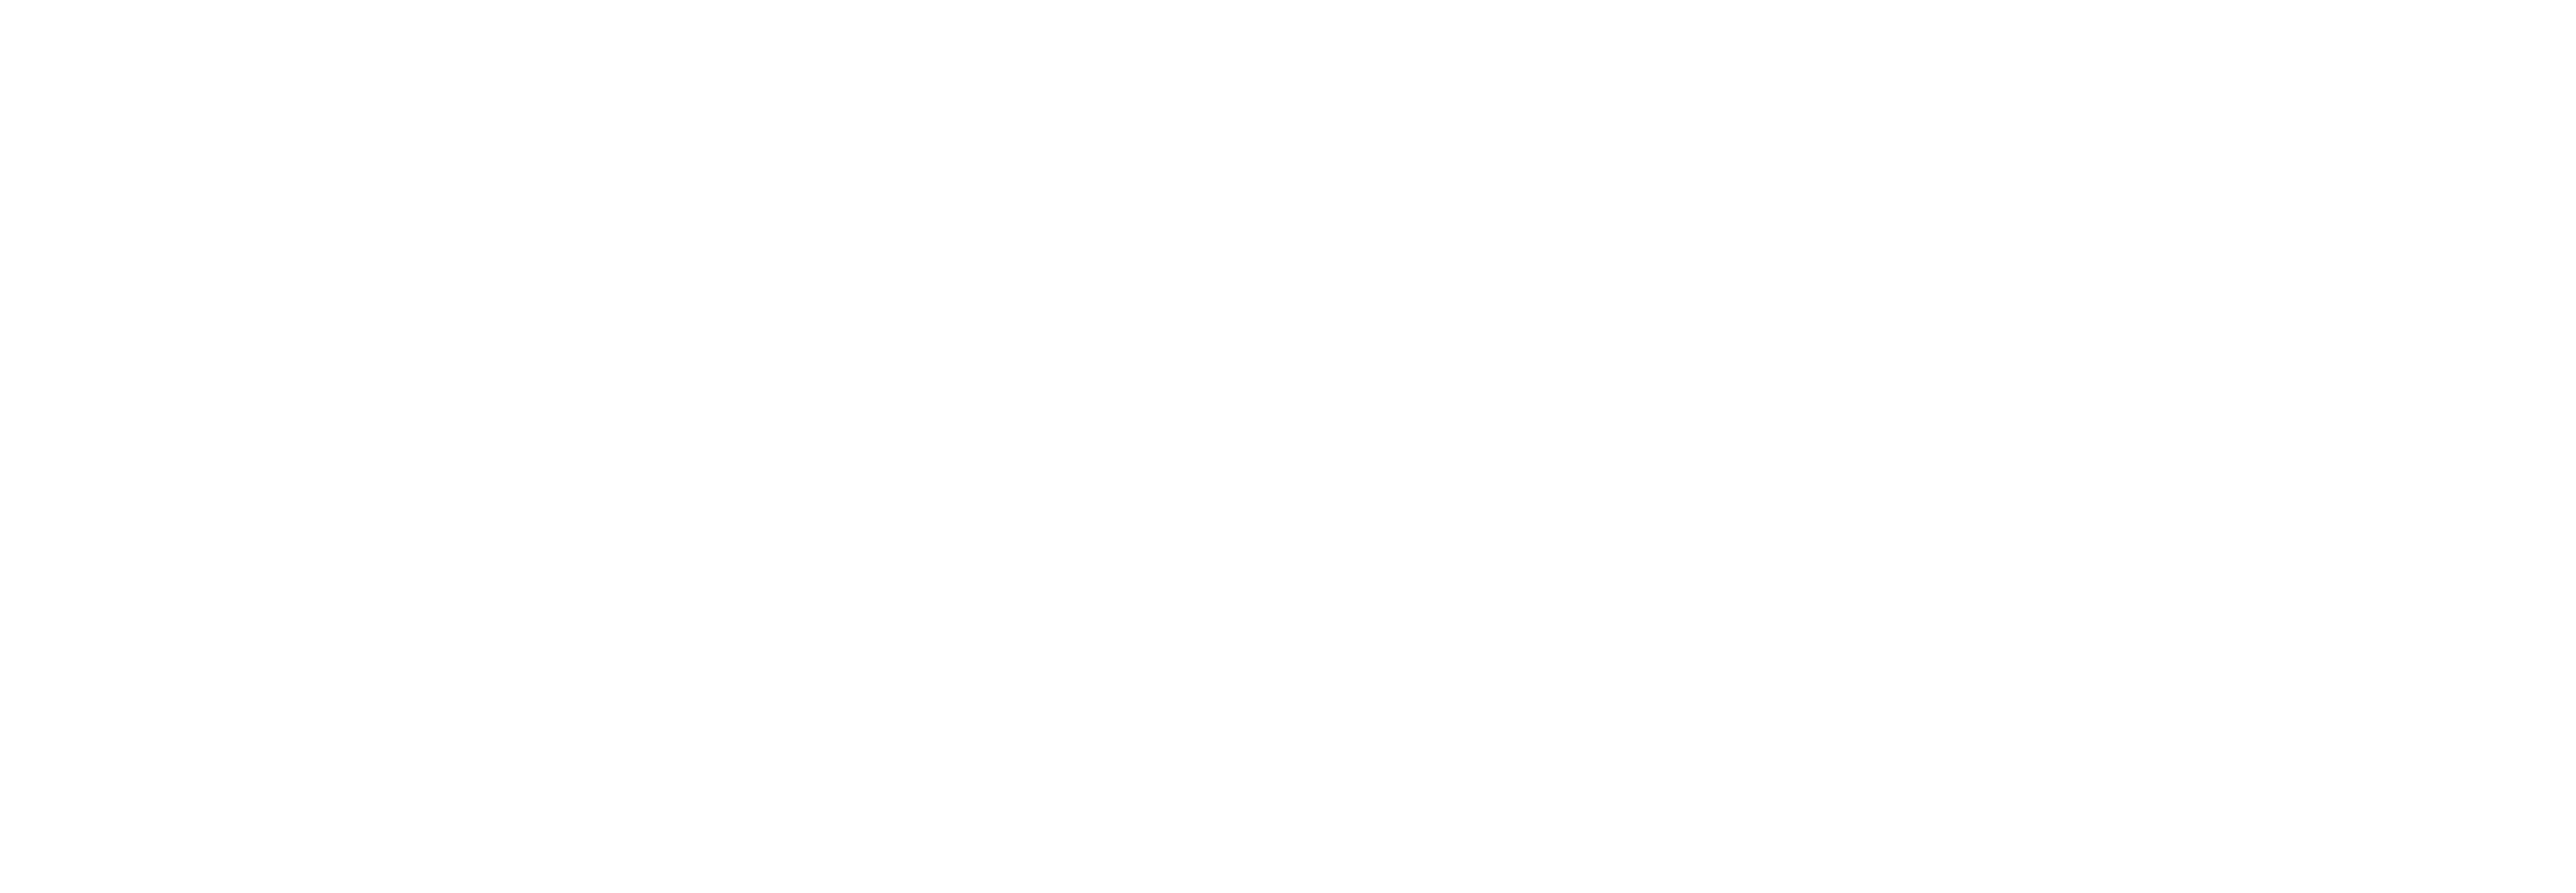 Peninsula Home Health Care logo